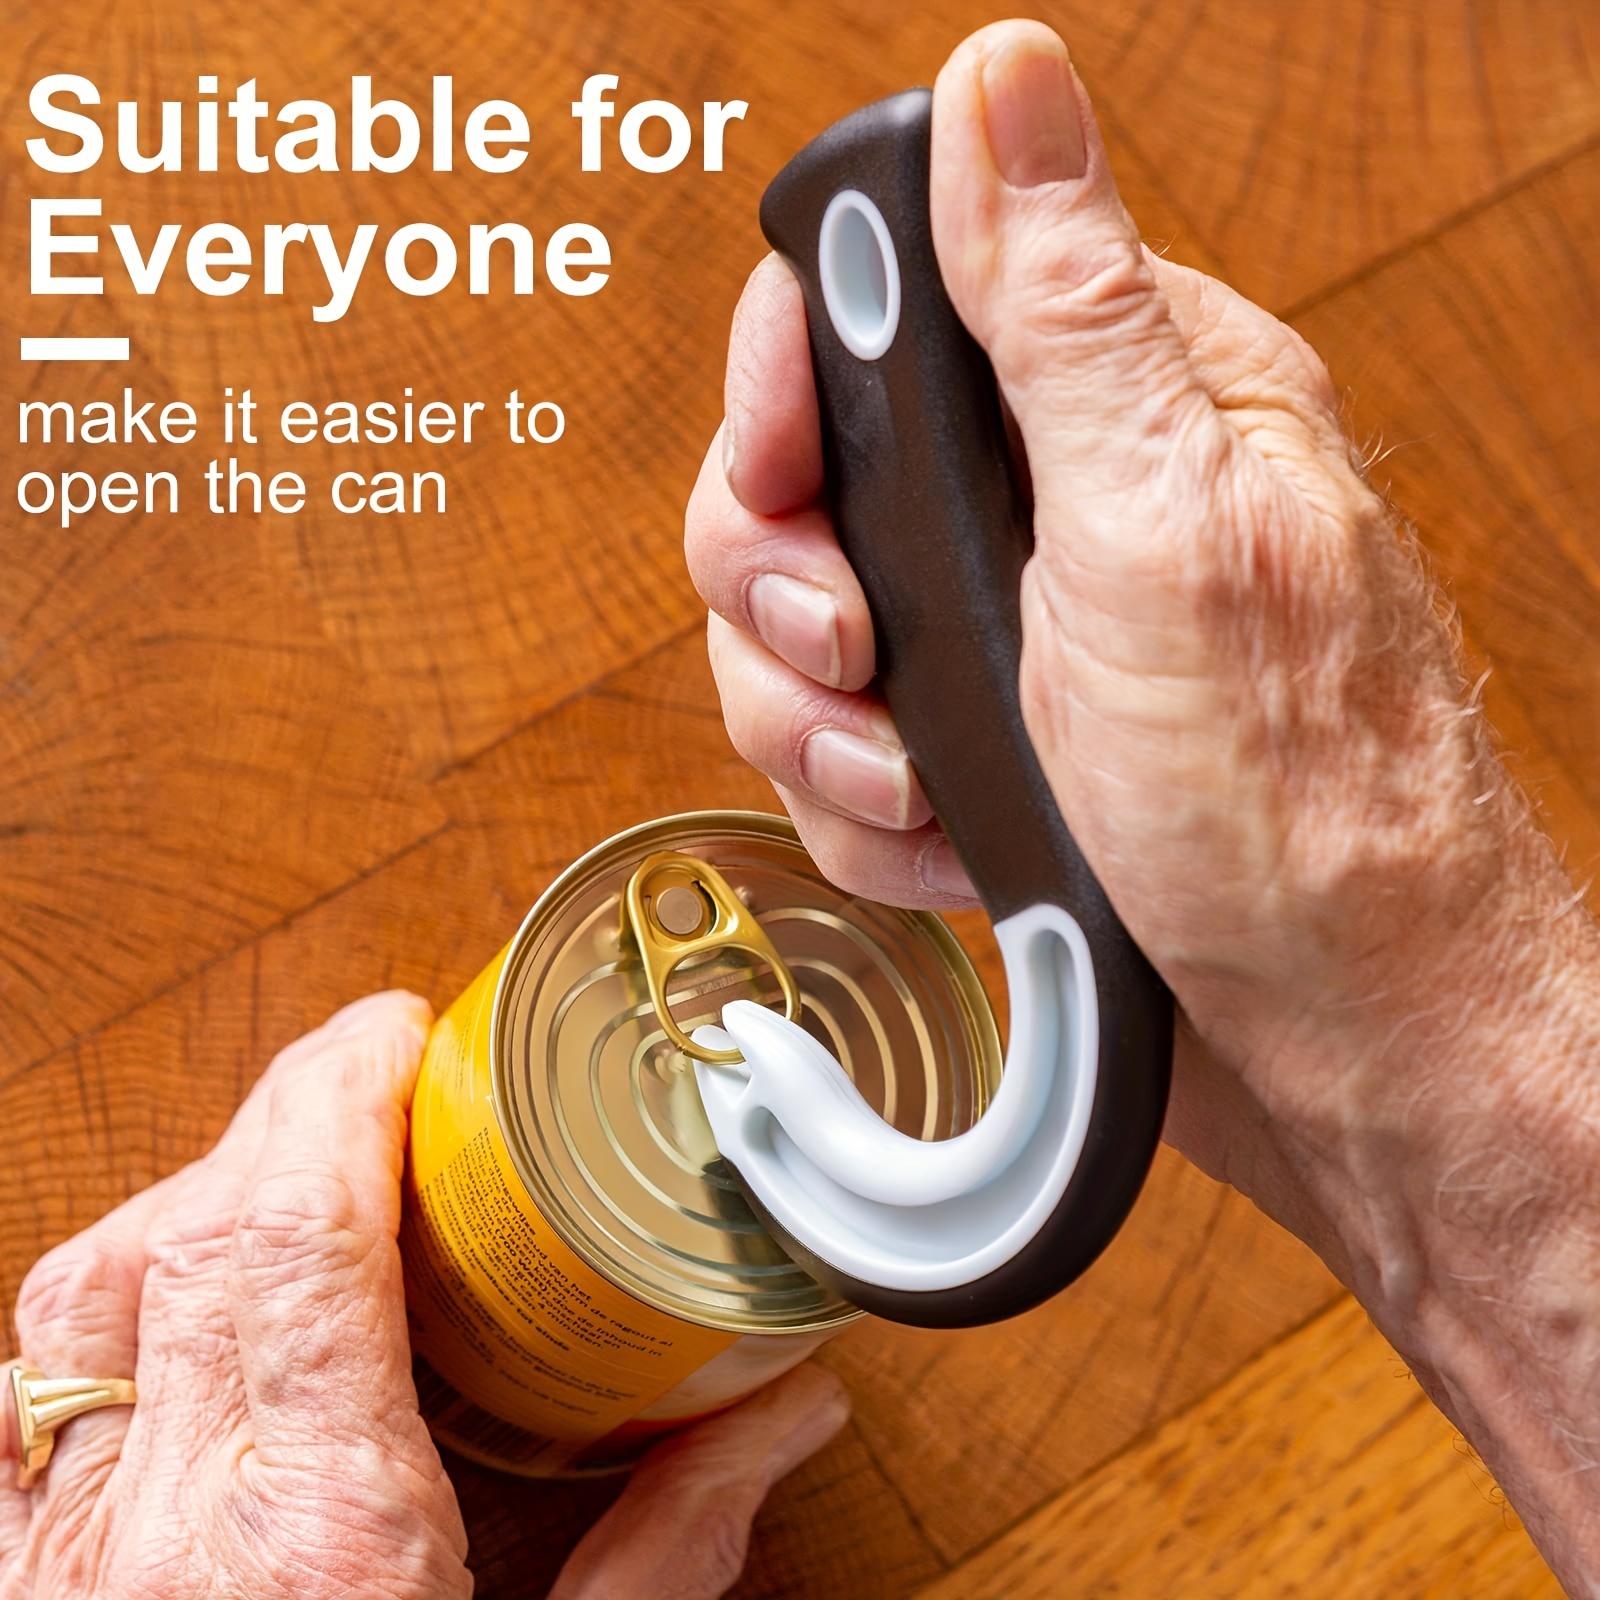  Bottle Opener for Arthritic Hand,Jar Opener for Old People,  Children, Women, Those with Weak Hands,Multifunctional Kitchen Gadgets  (02-Black) : Home & Kitchen